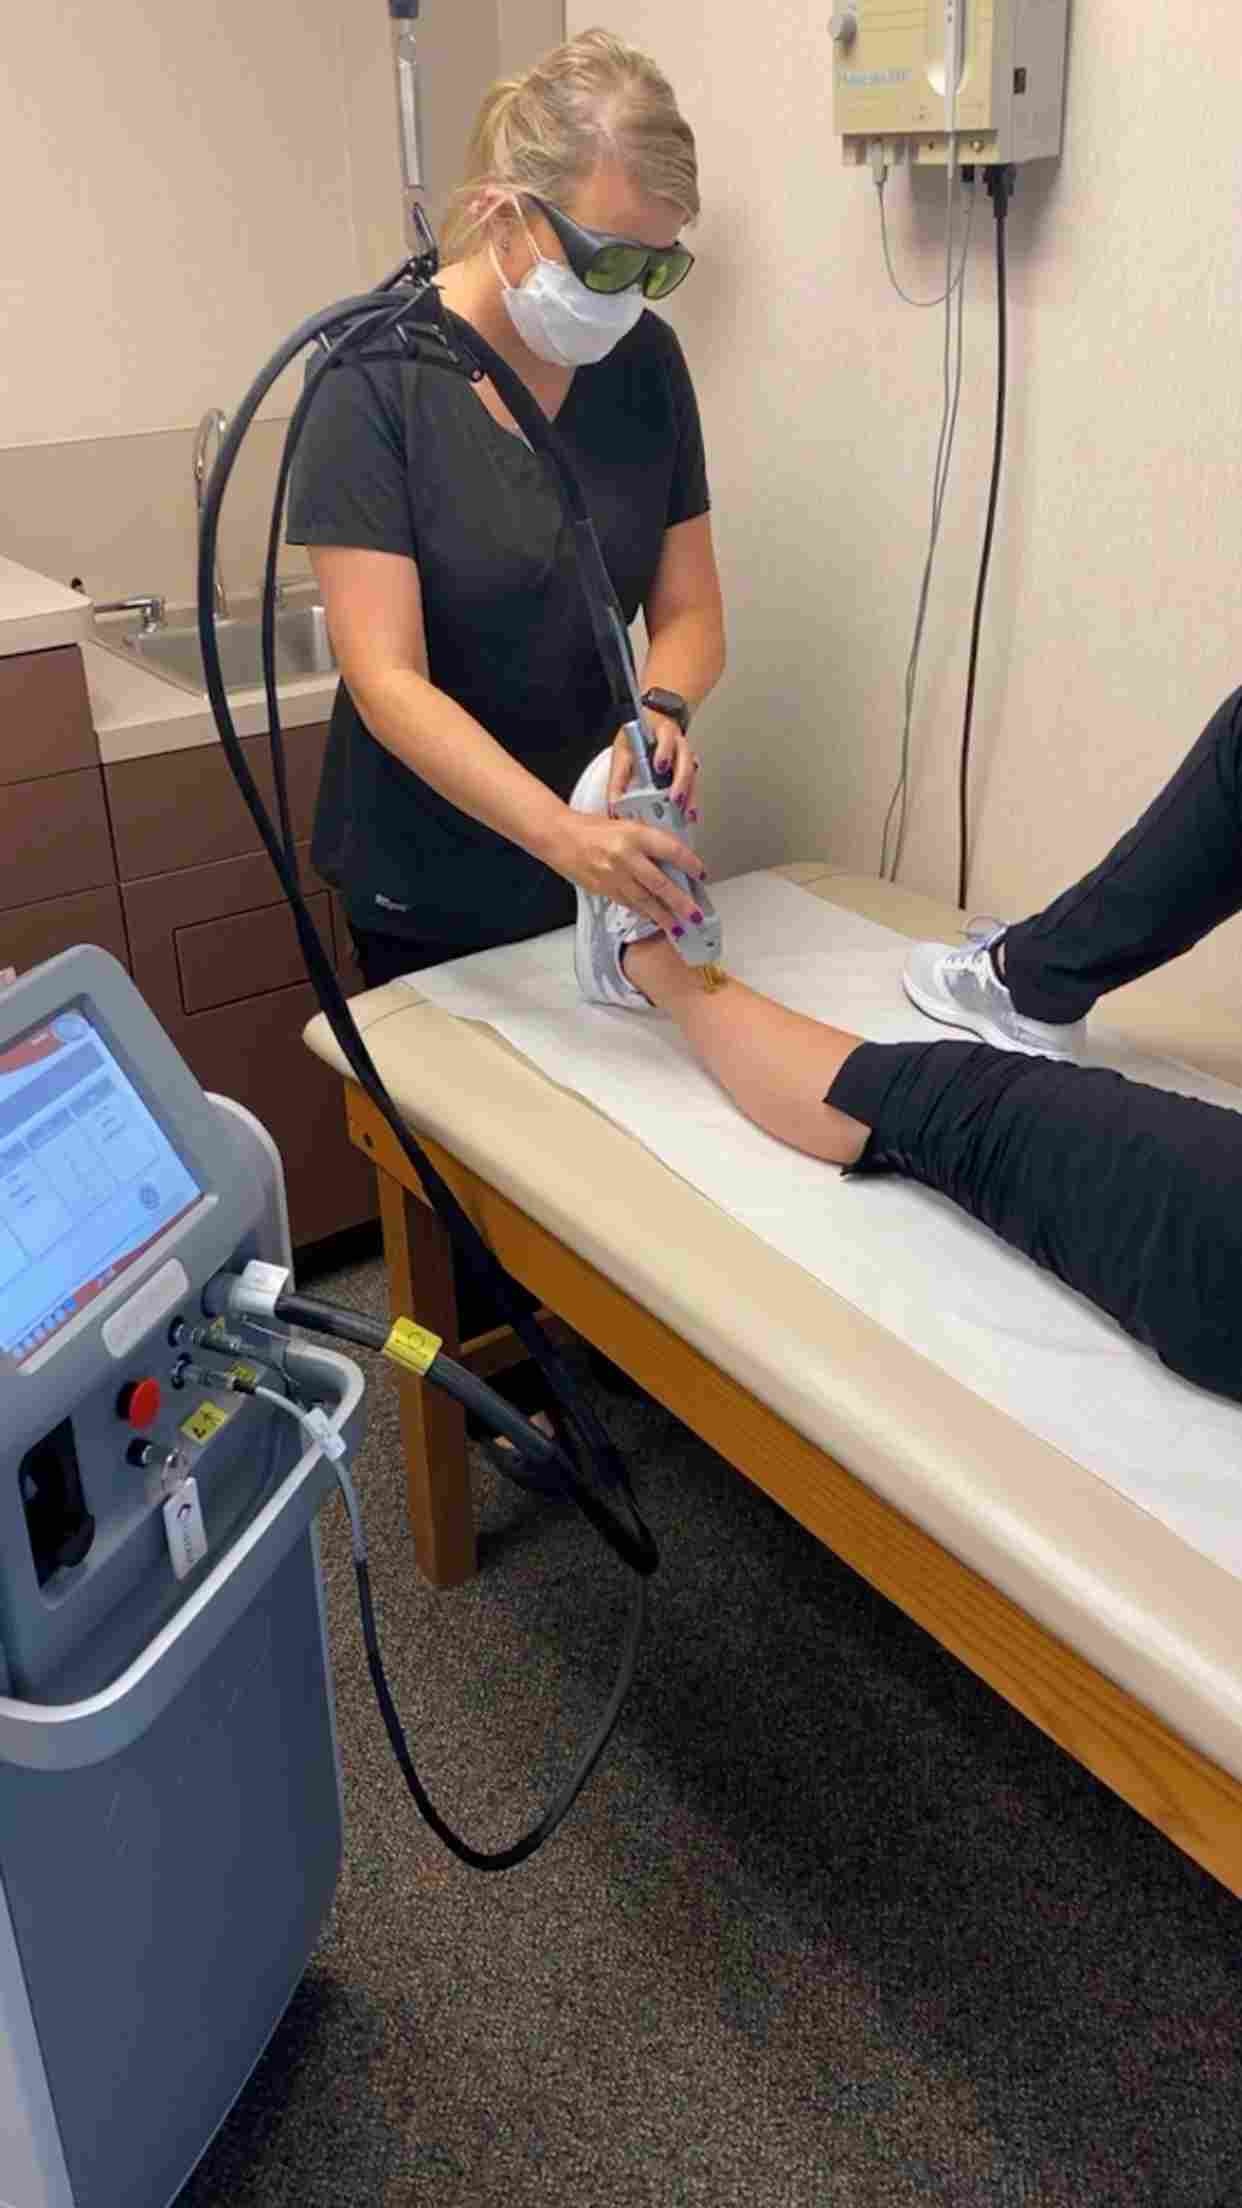 A person doing a laser leg treatment on a patient